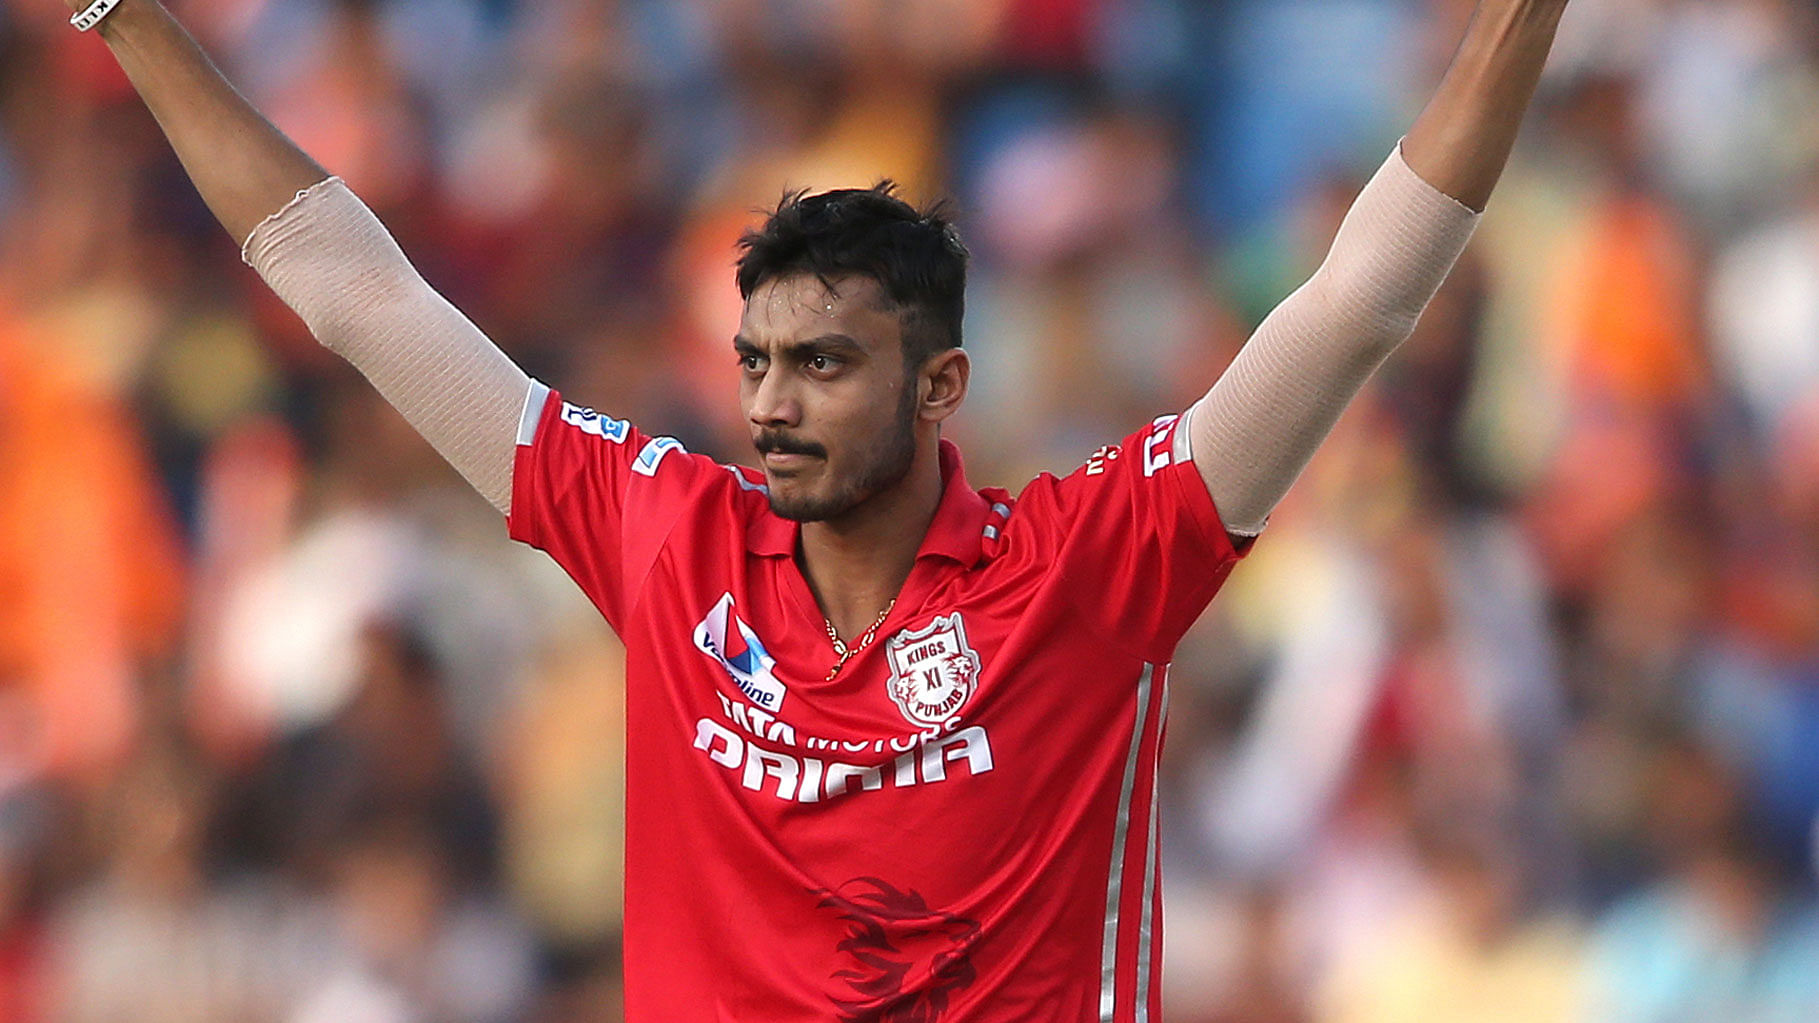 Axar Patel celebrates after taking a wicket. (Photo: BCCI)